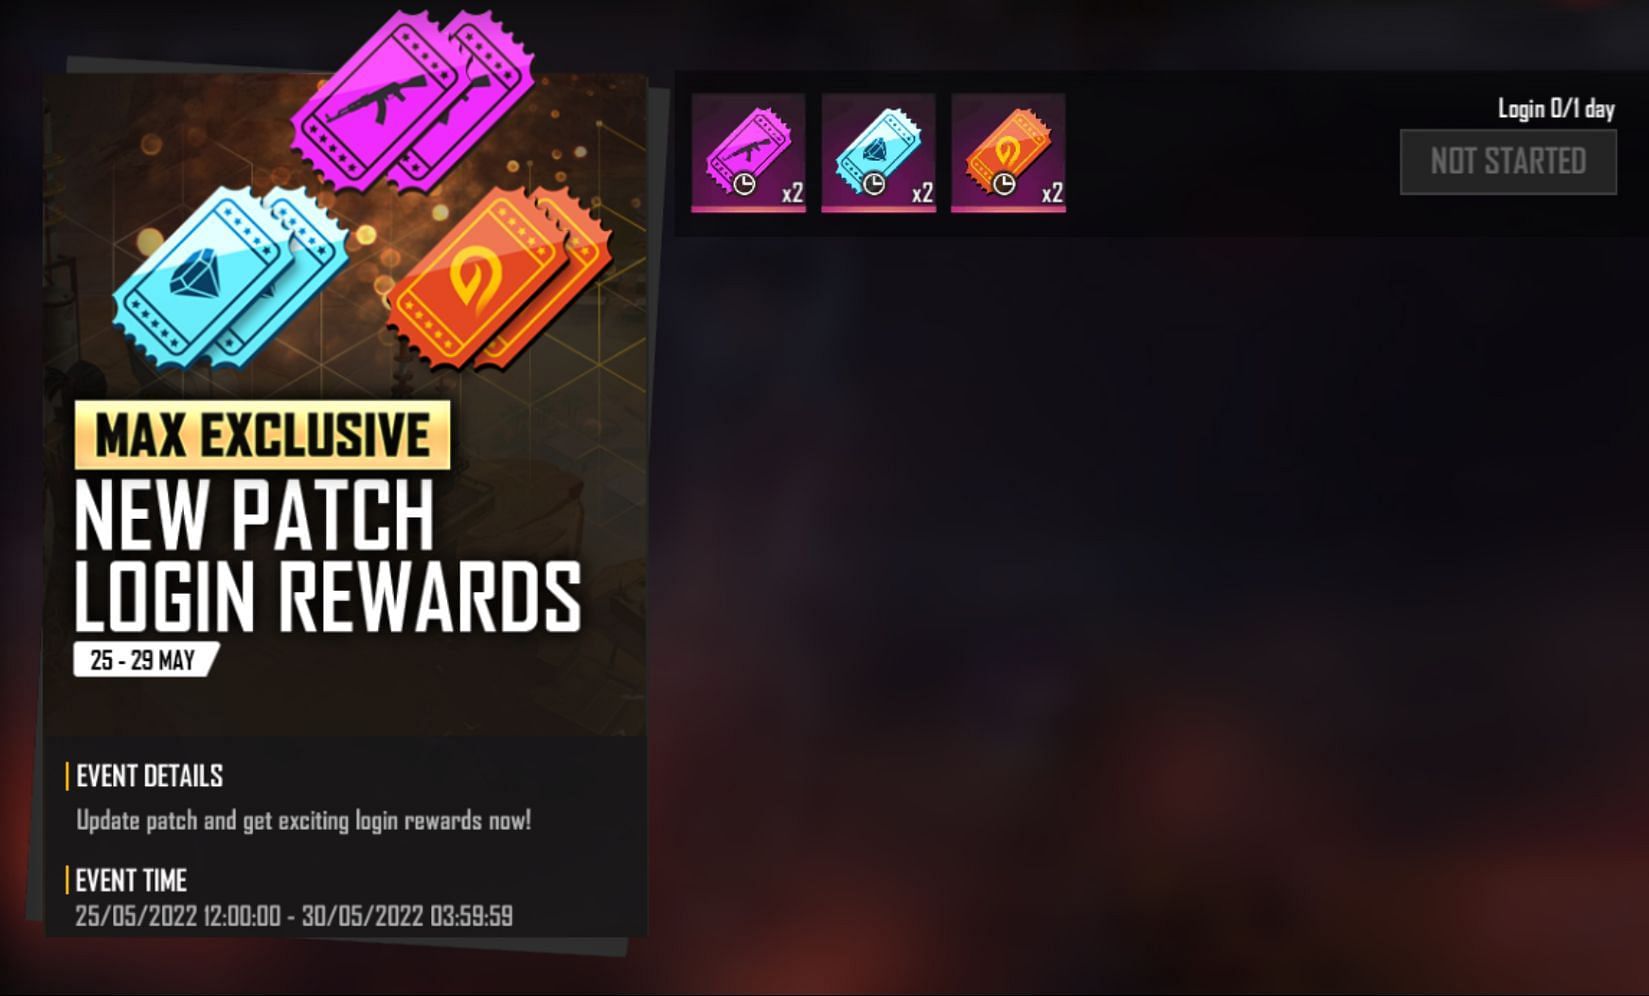 The patch rewards (Image via Garena)